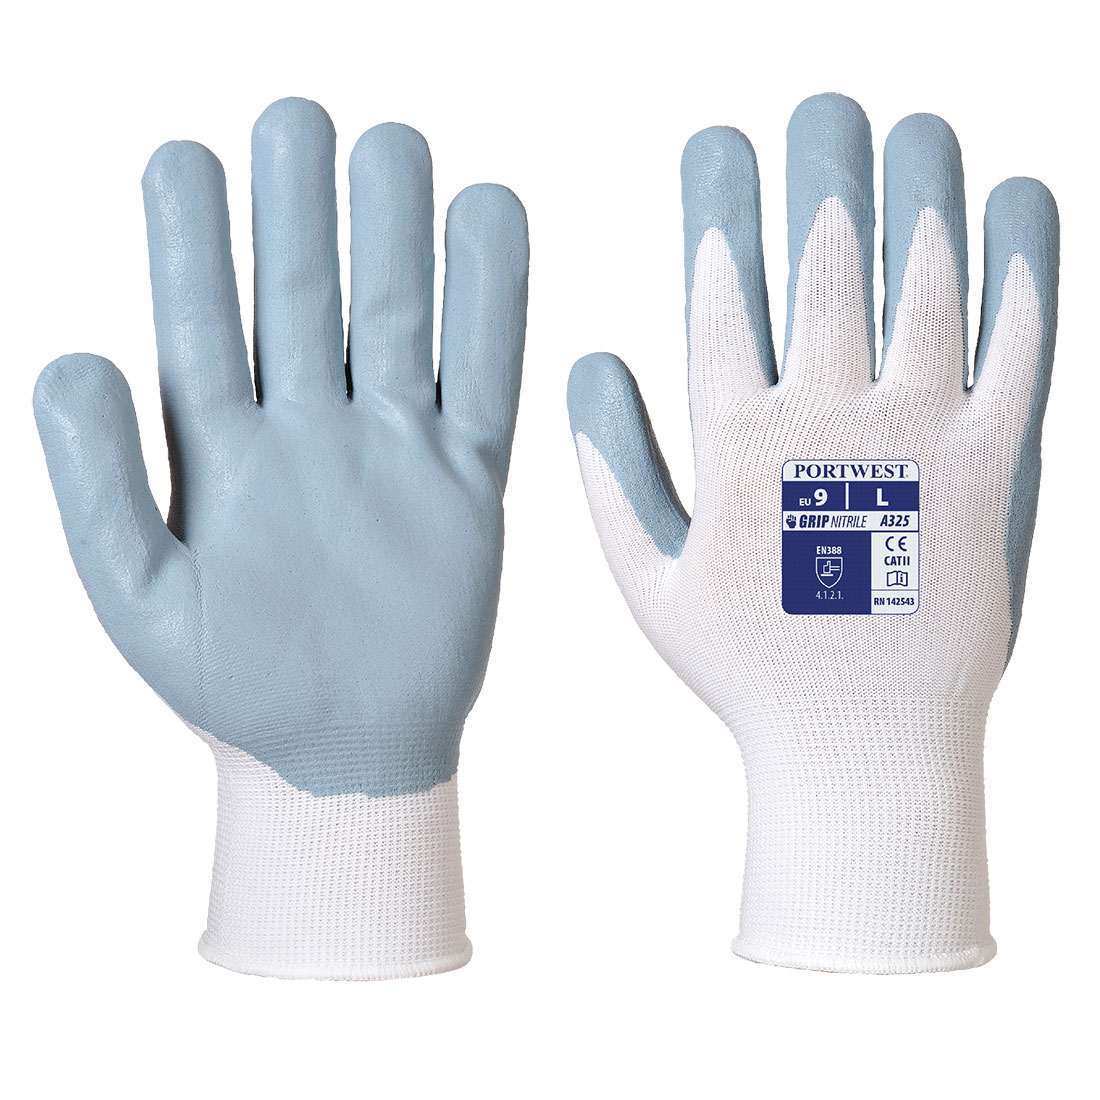 Dexti-Grip Pro Glove Size XXL White/Grey